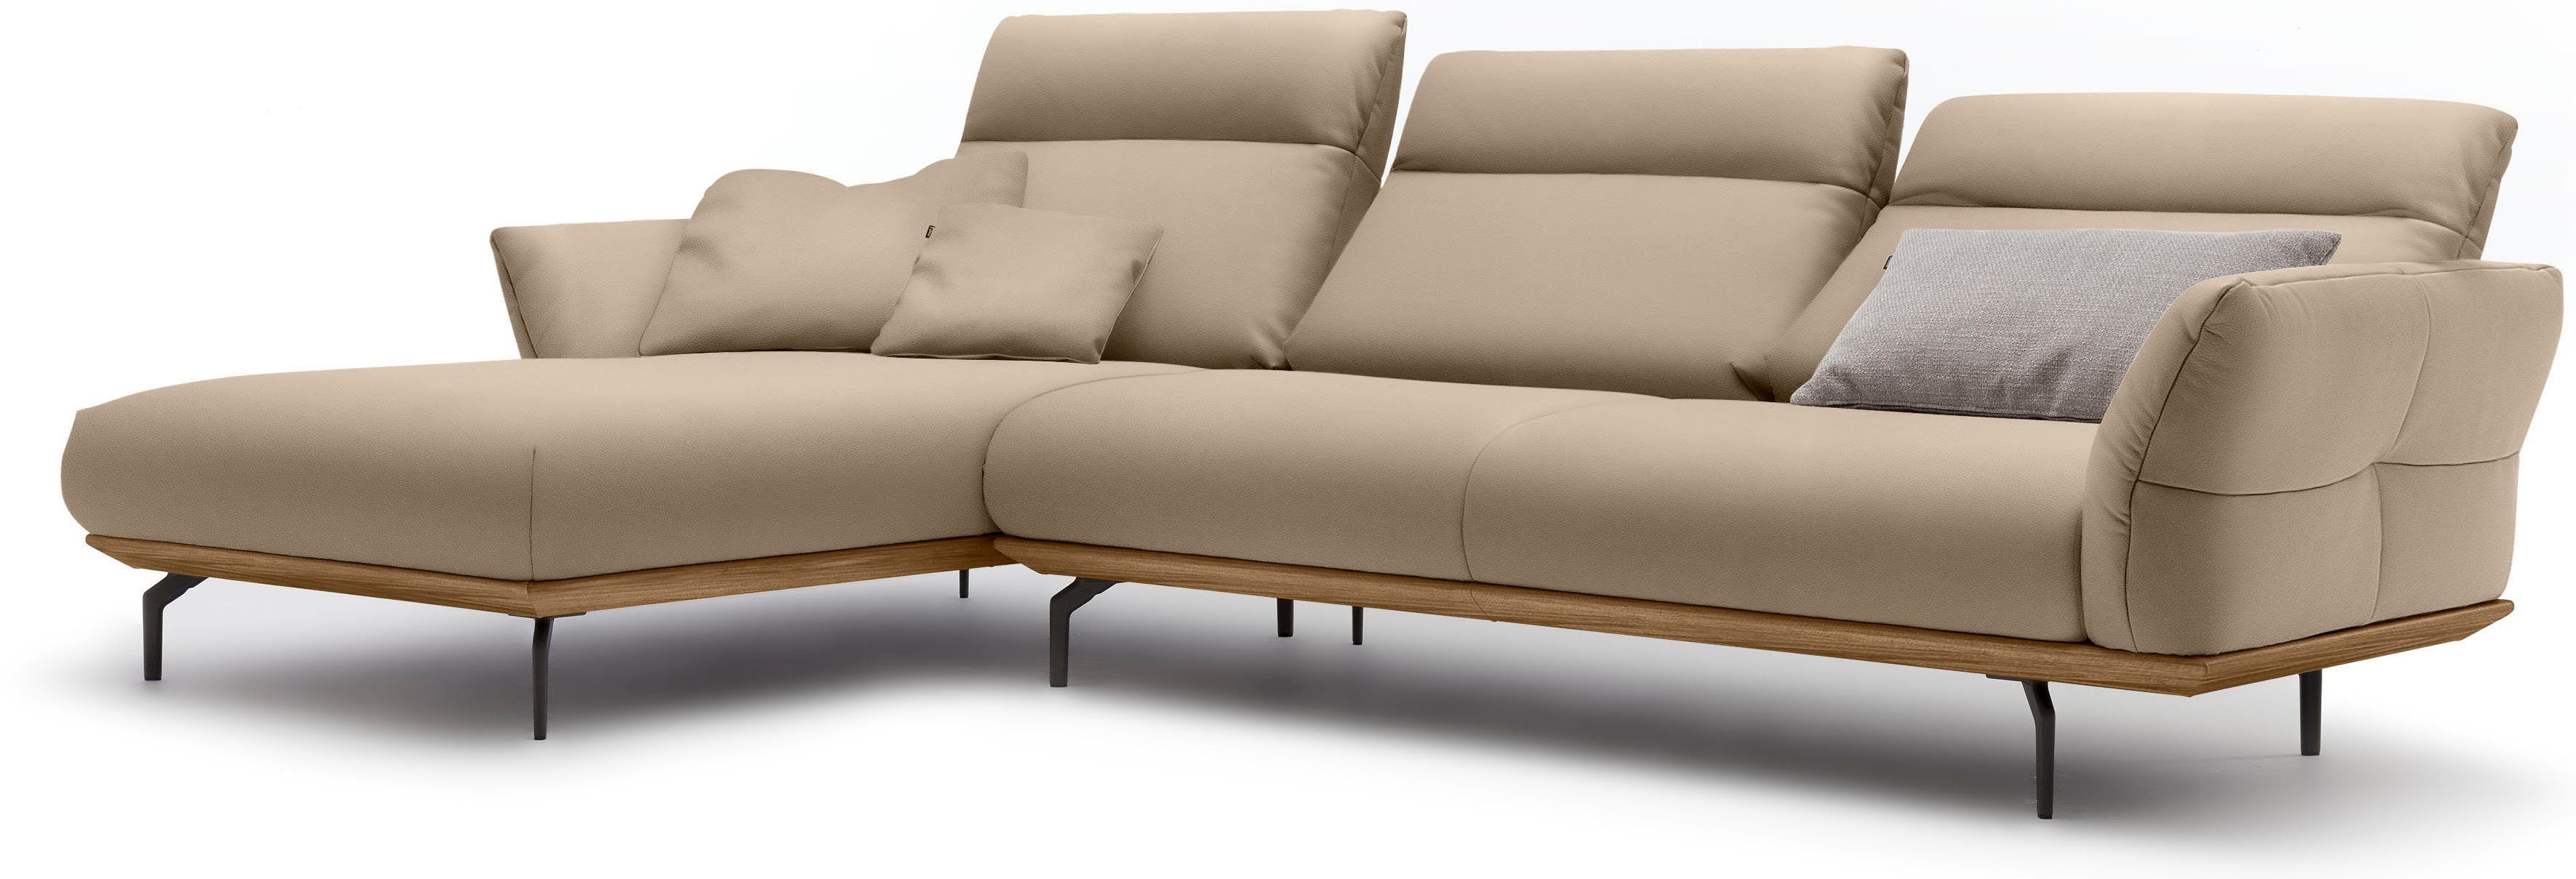 Winkelfüße in cm Umbragrau, hs.460, 318 Ecksofa Nussbaum, hülsta sofa Breite in Sockel